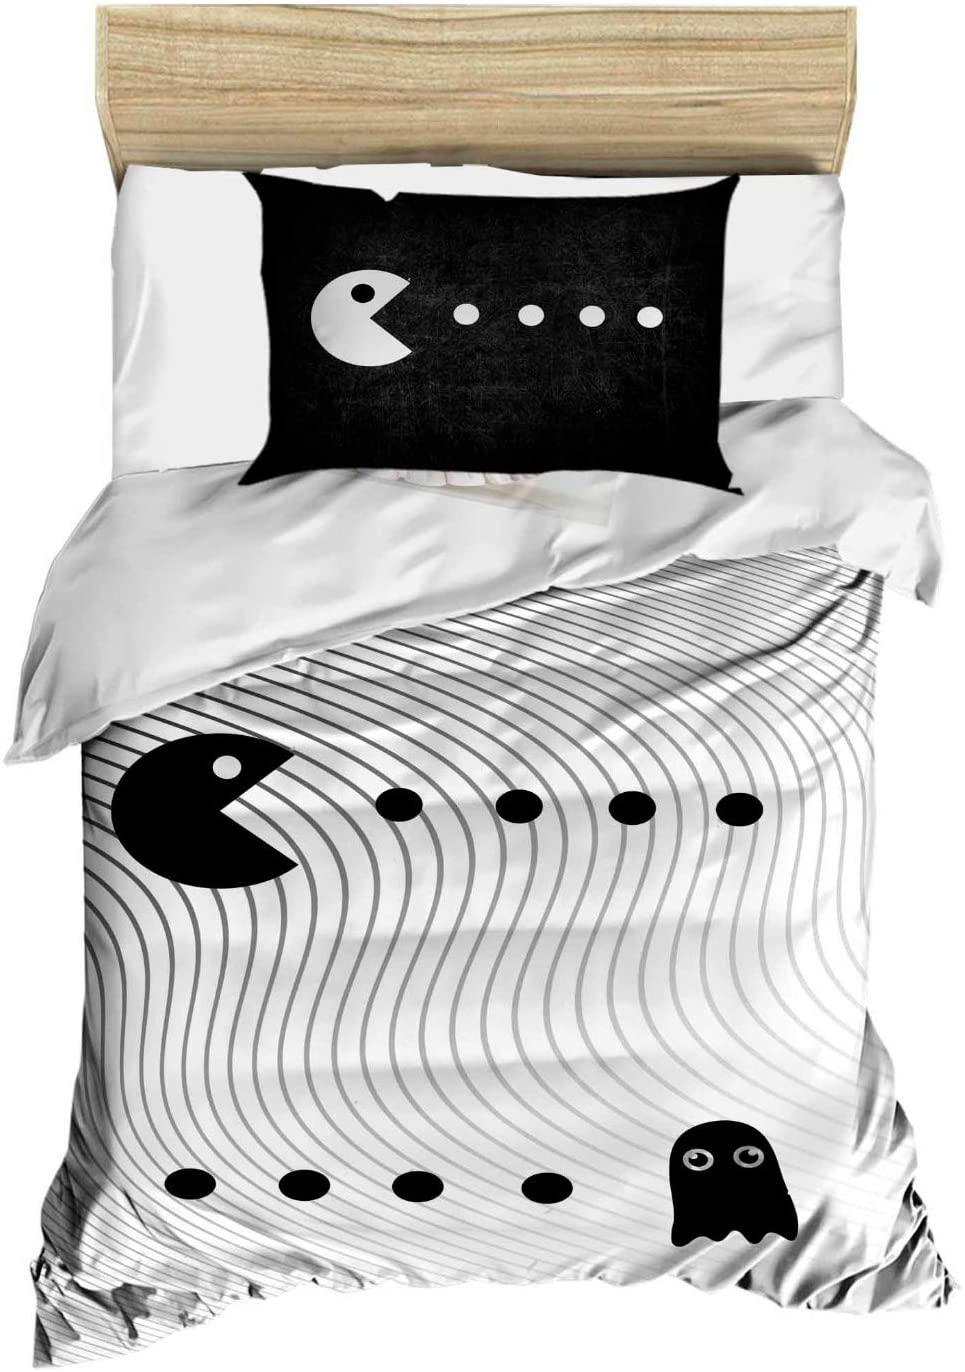 Pacman Duvet Cover Set Single Bed